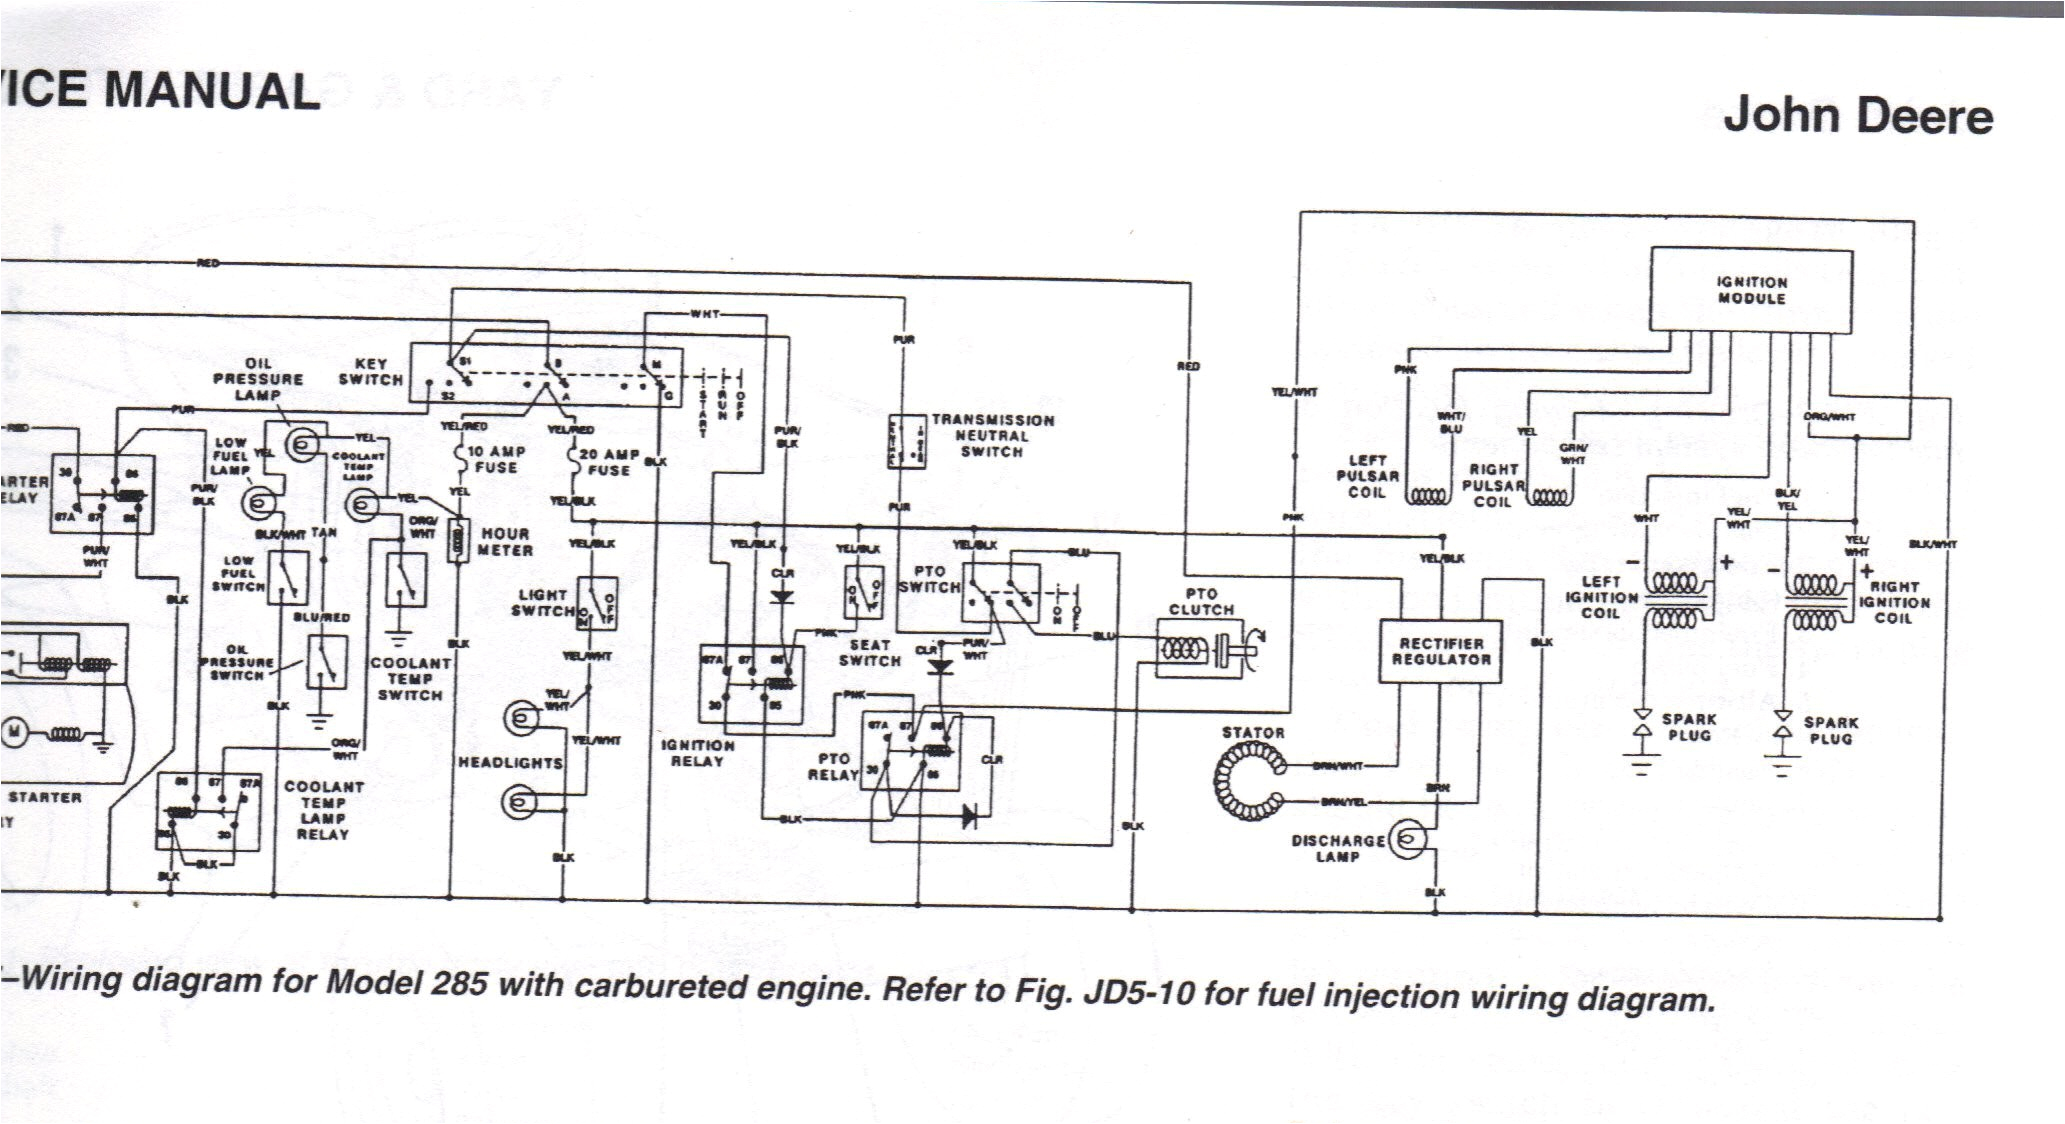 john deere 7410 wiring diagram wiring diagram fascinating john deere 7410 wiring diagram john deere 7410 wiring diagram